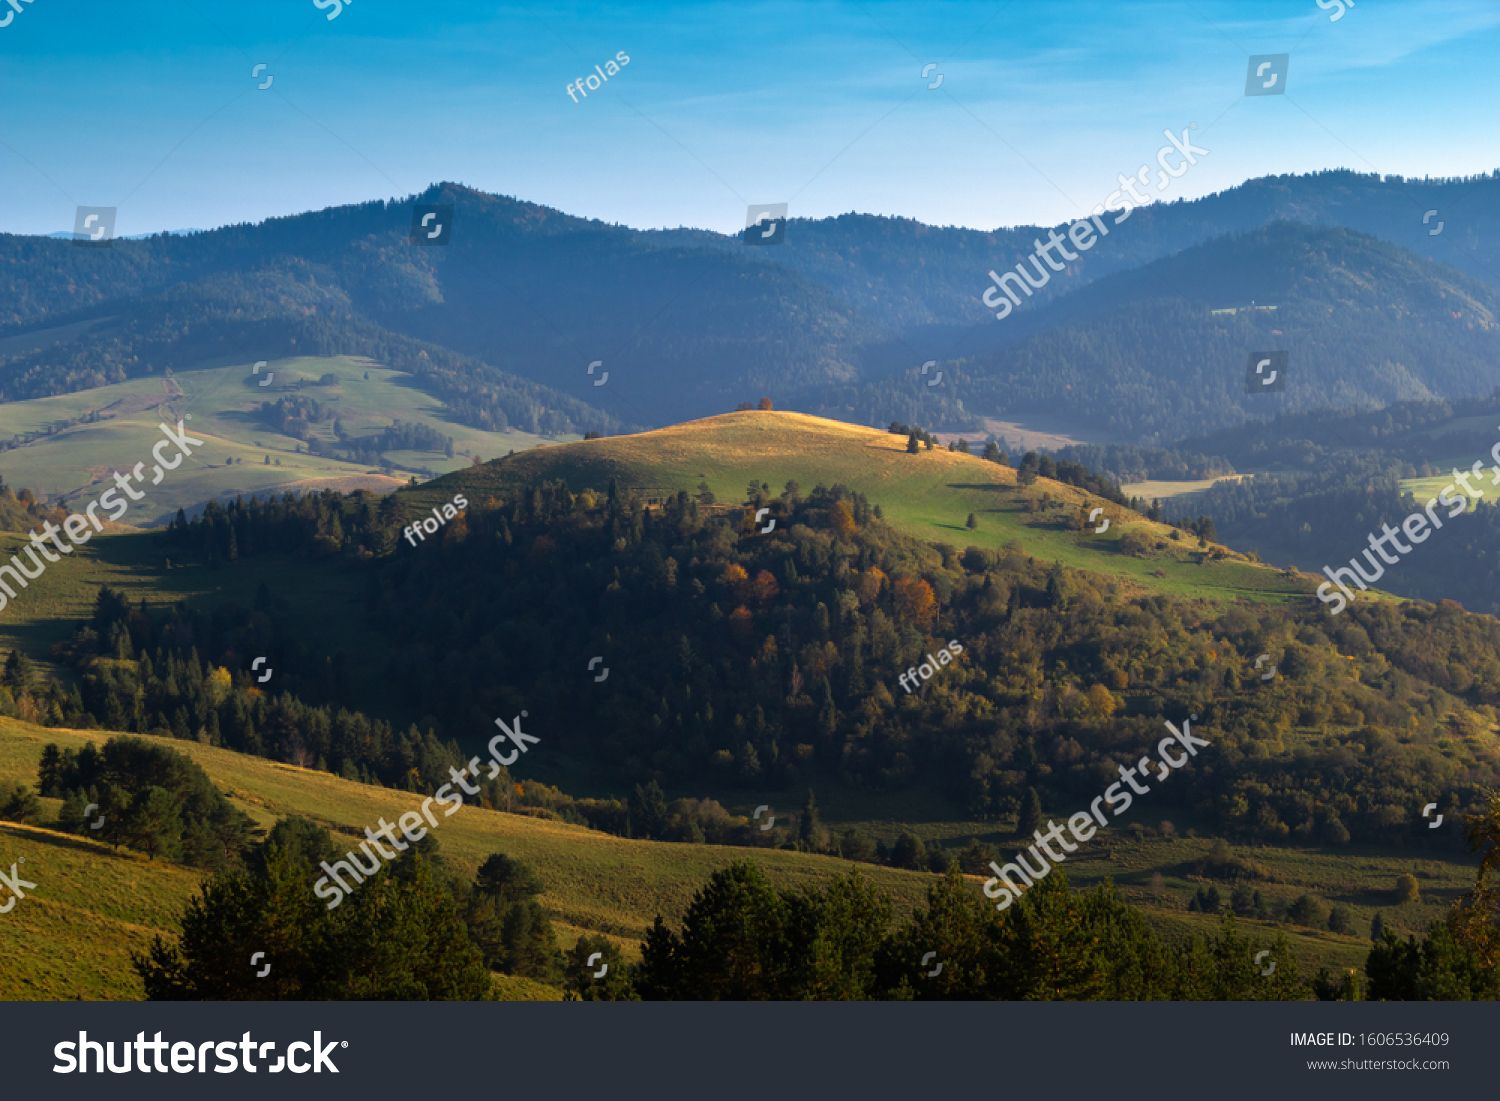 Vysoky vrch mountain in Pieniny National Park in Slovakia. #1606536409